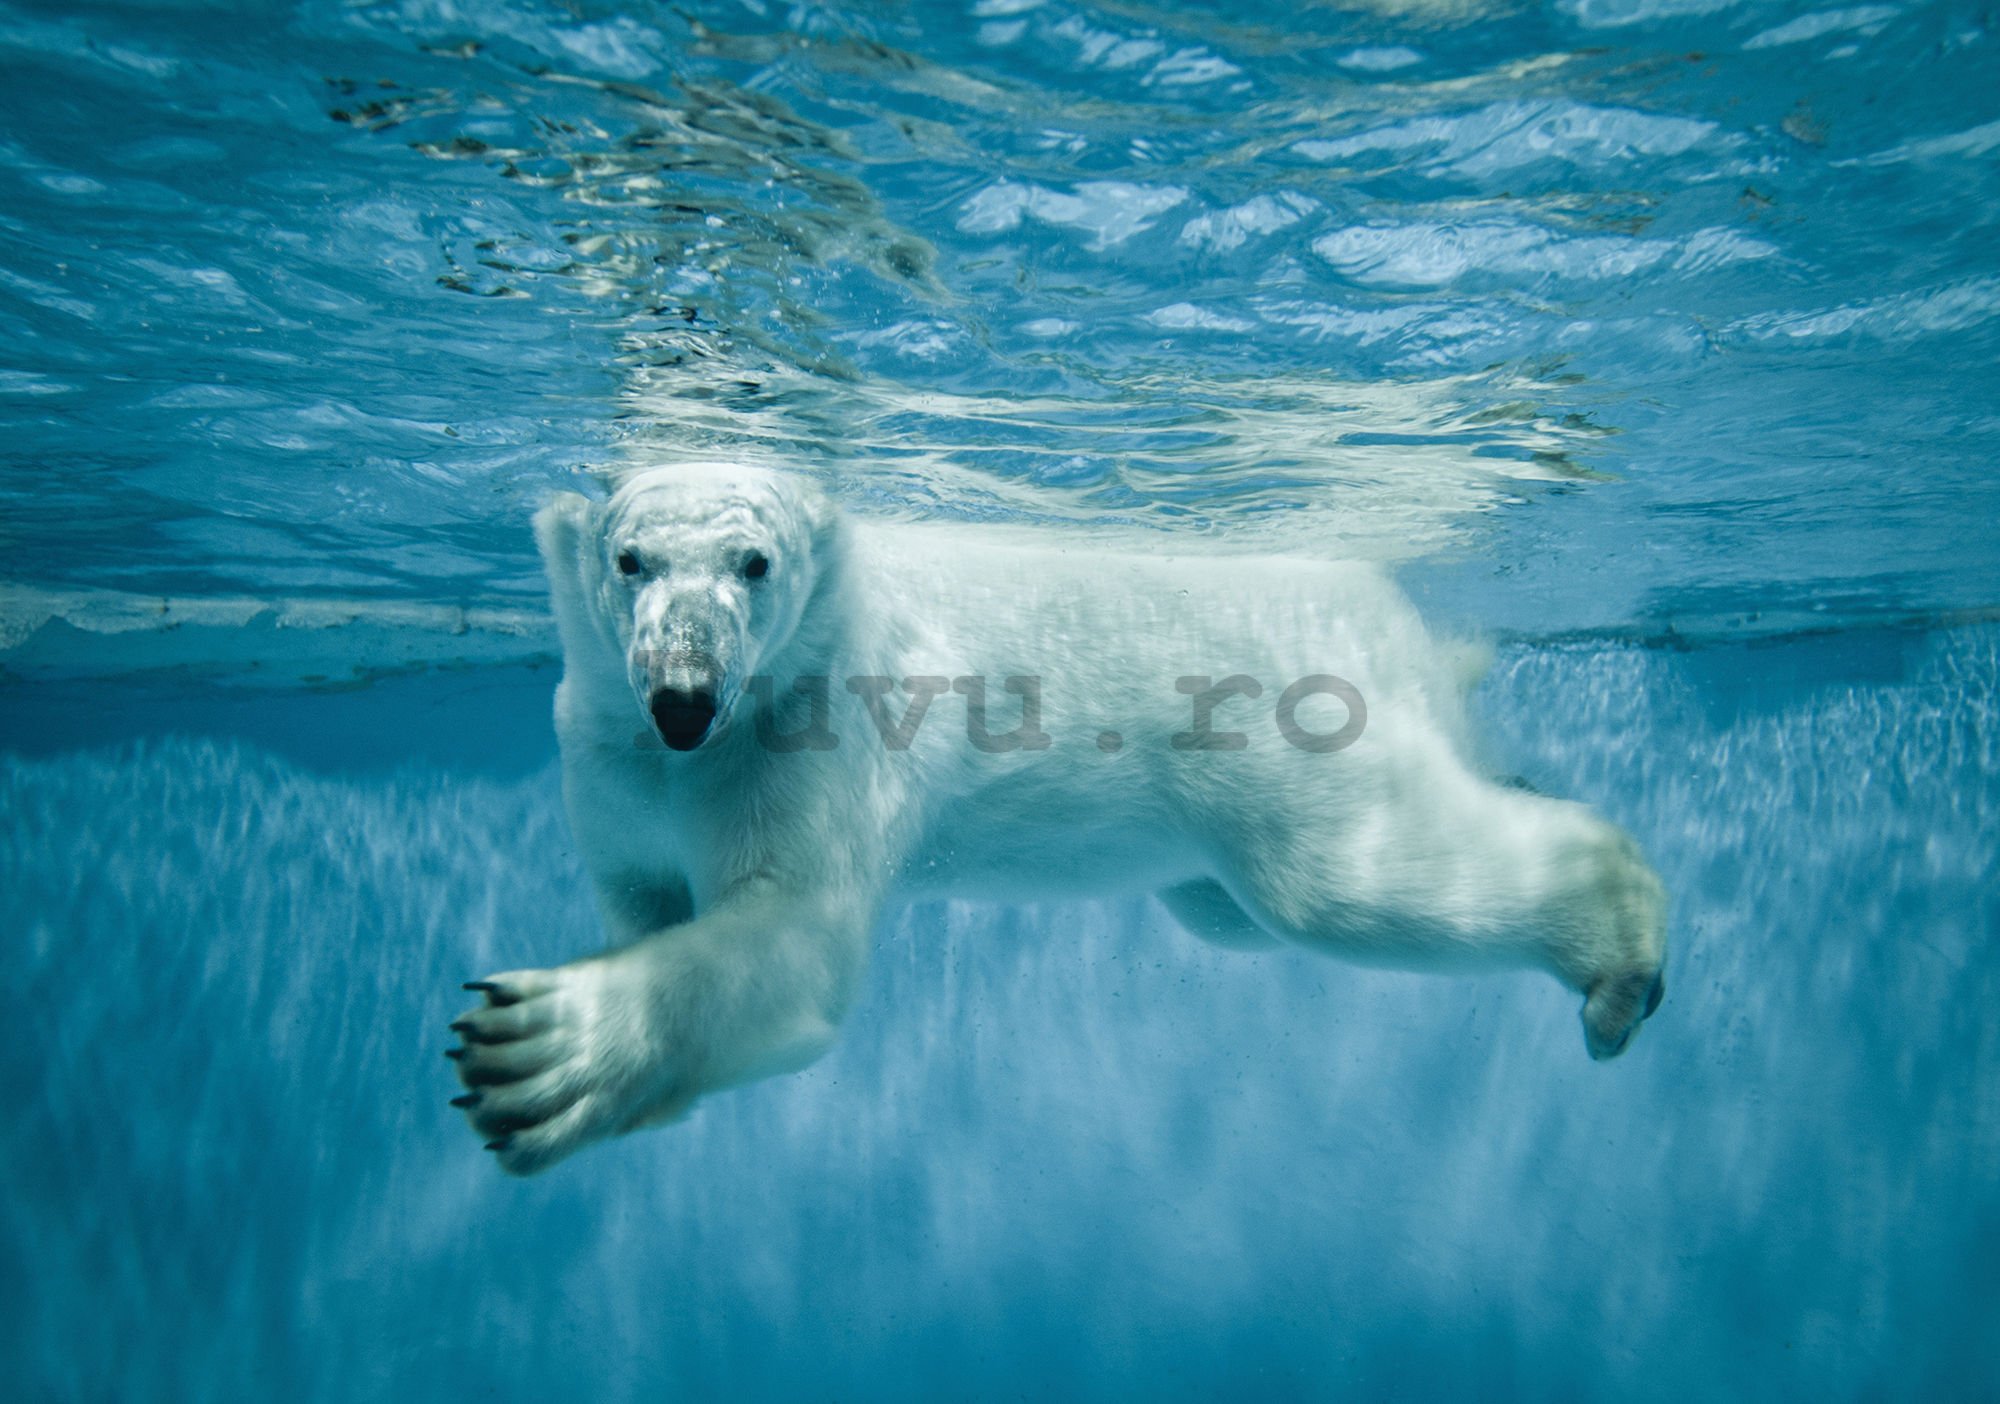 Fototapet vlies: Polar Bear (1) - 254x368 cm